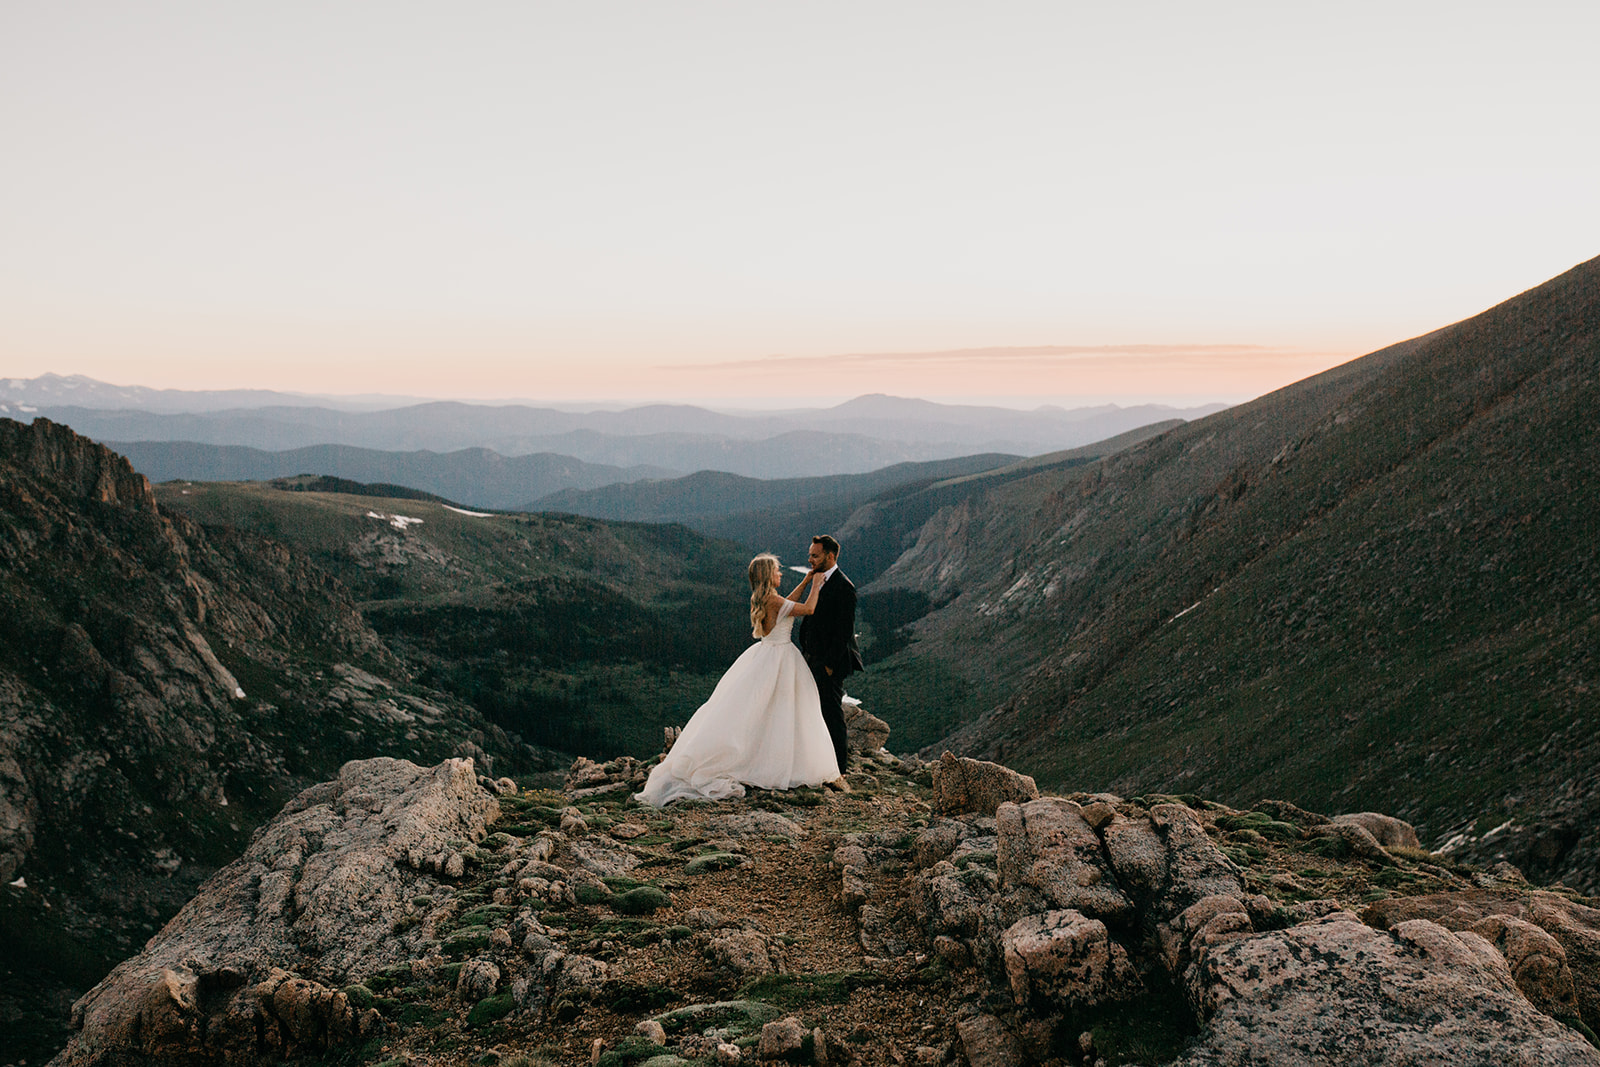 Couple enjoying the sunset during their rocky mountain wedding